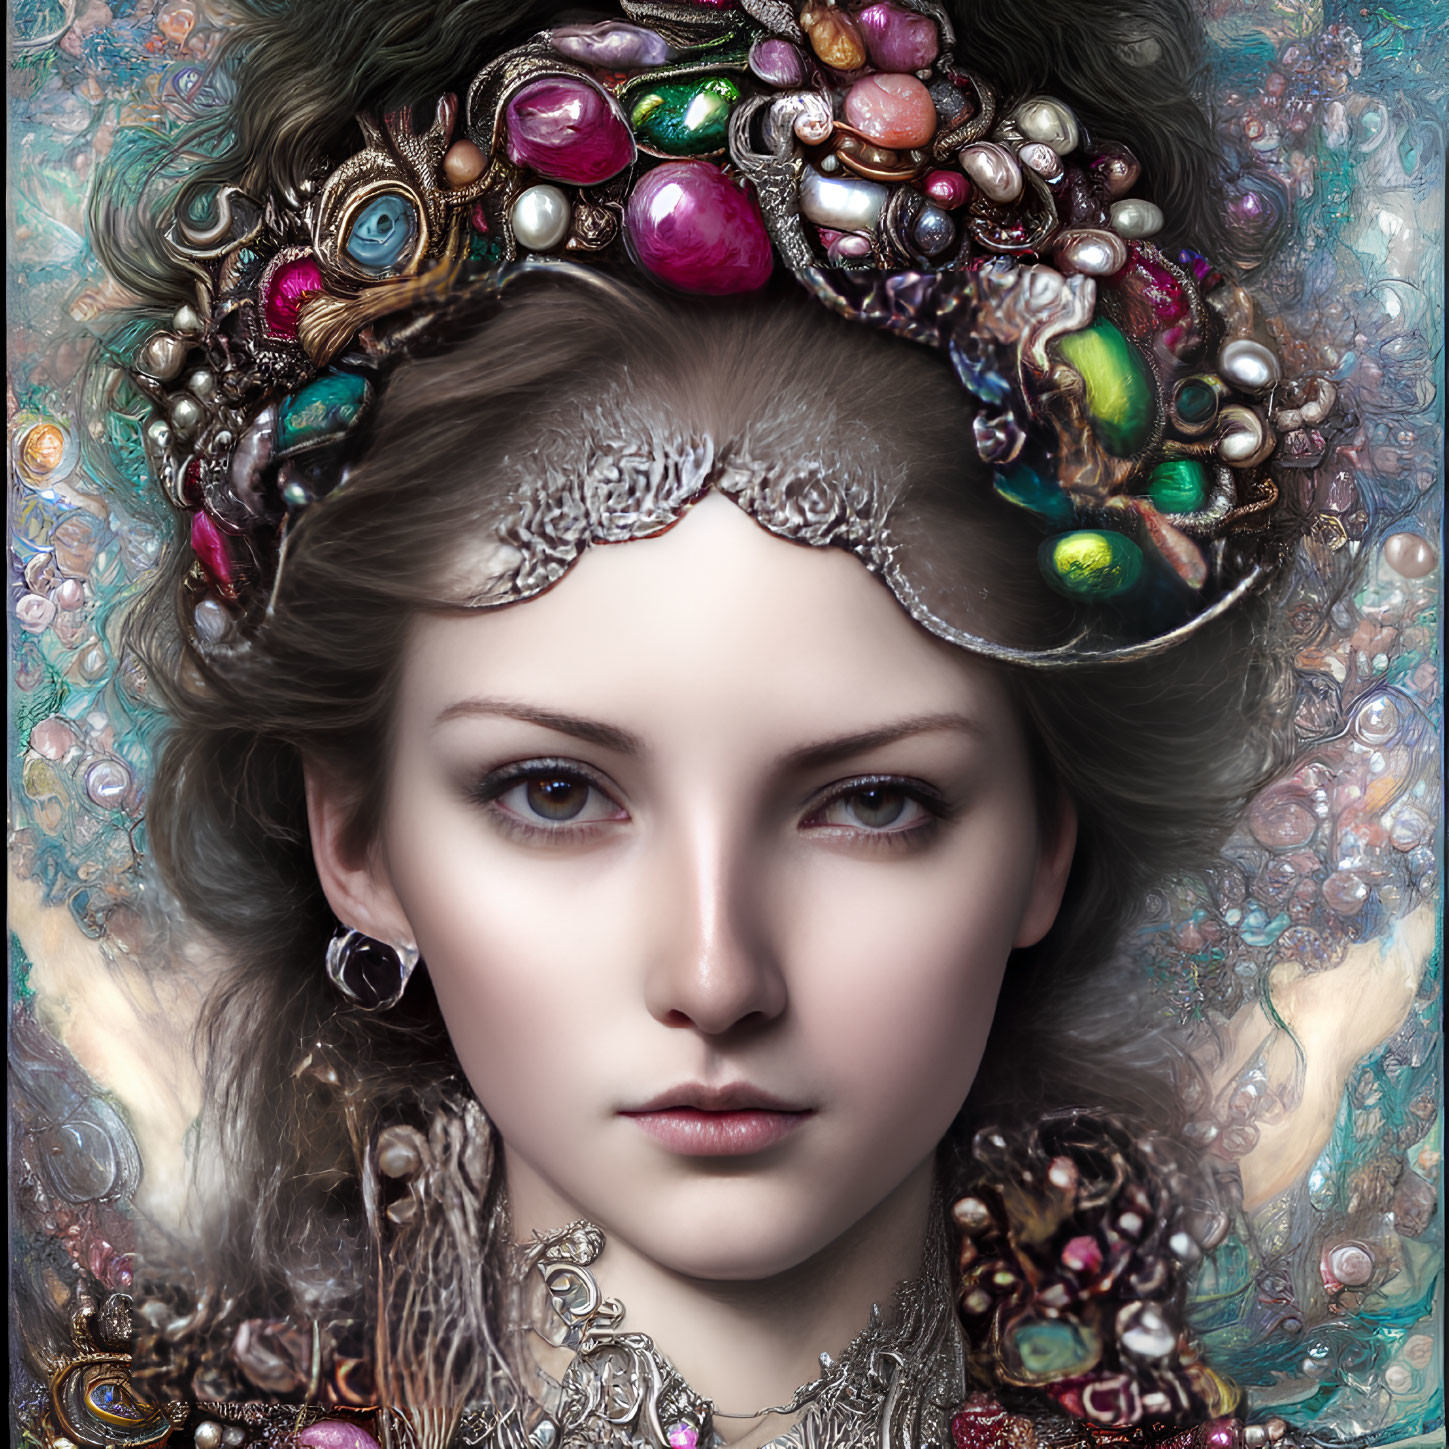 Colorful Gemstone Ornate Headpiece Portrait in Kaleidoscopic Background